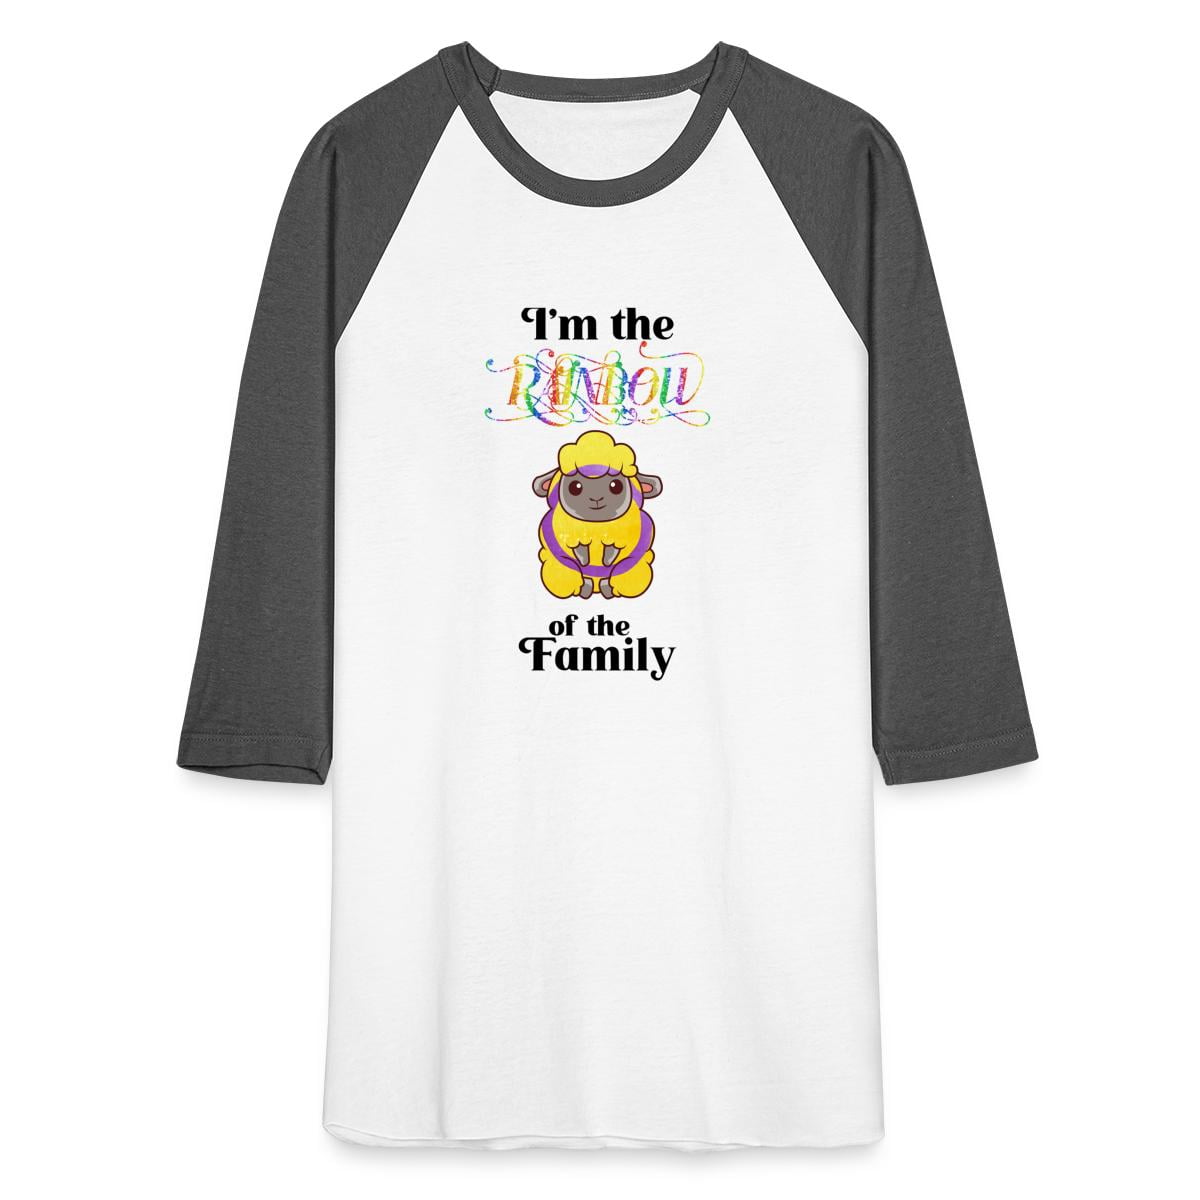 The Rainbow Sheep Of The Family Intersex Flag Unisex Baseball T-Shirt ...